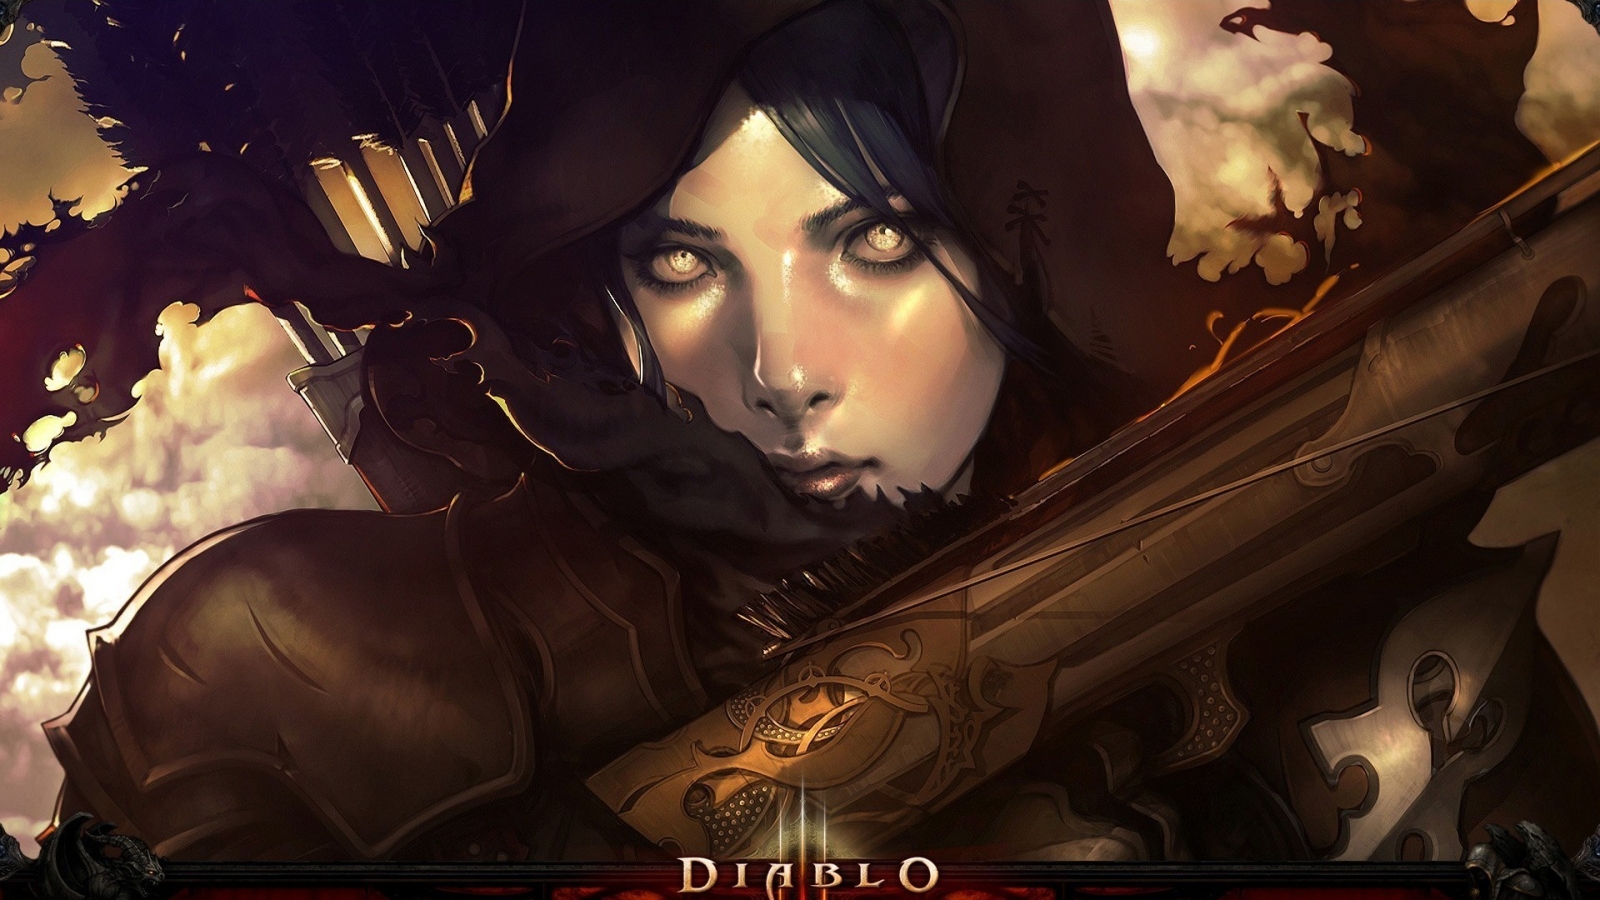 Diablo III Character for 1600 x 900 HDTV resolution